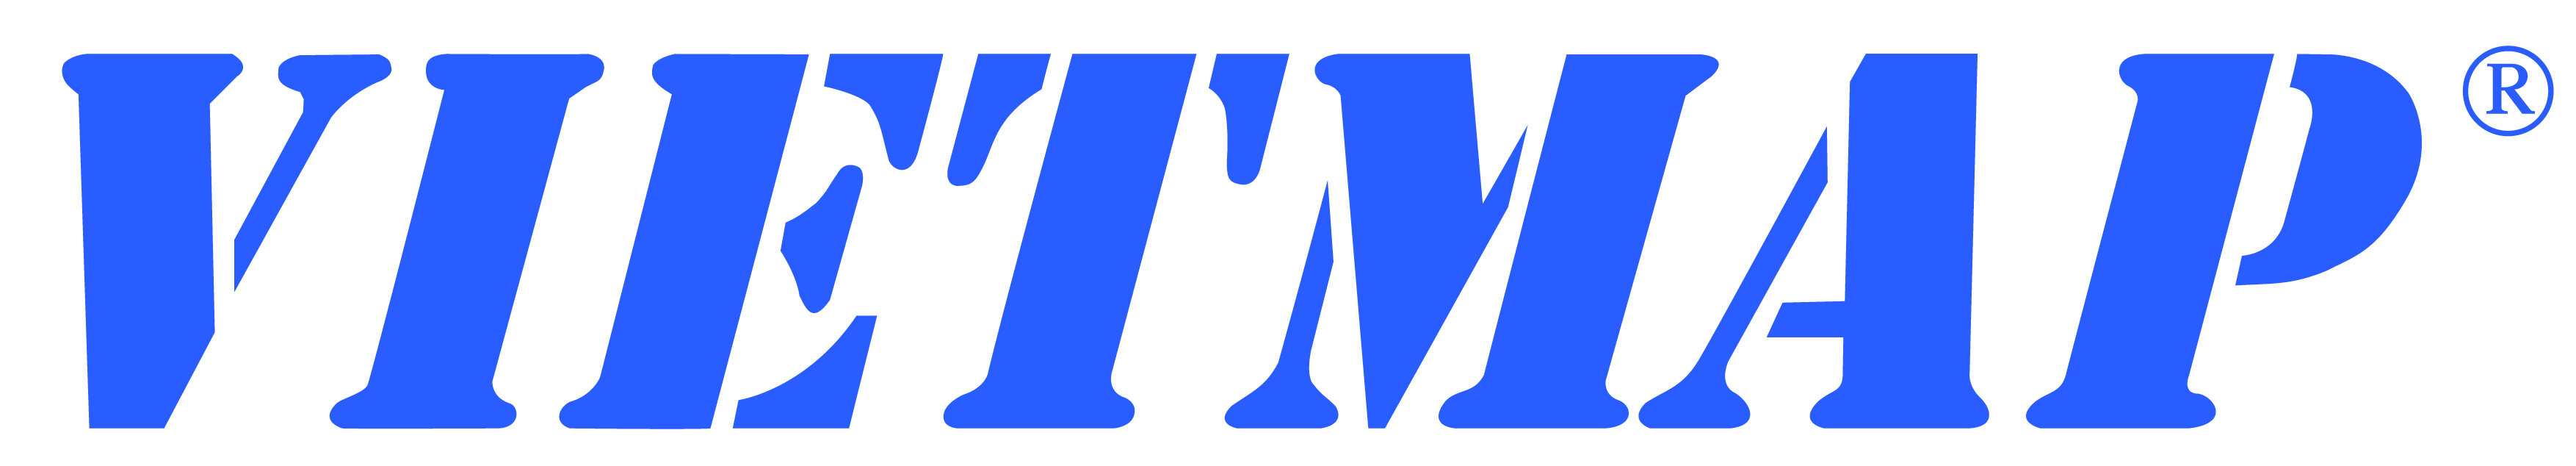 logo VIETMAP